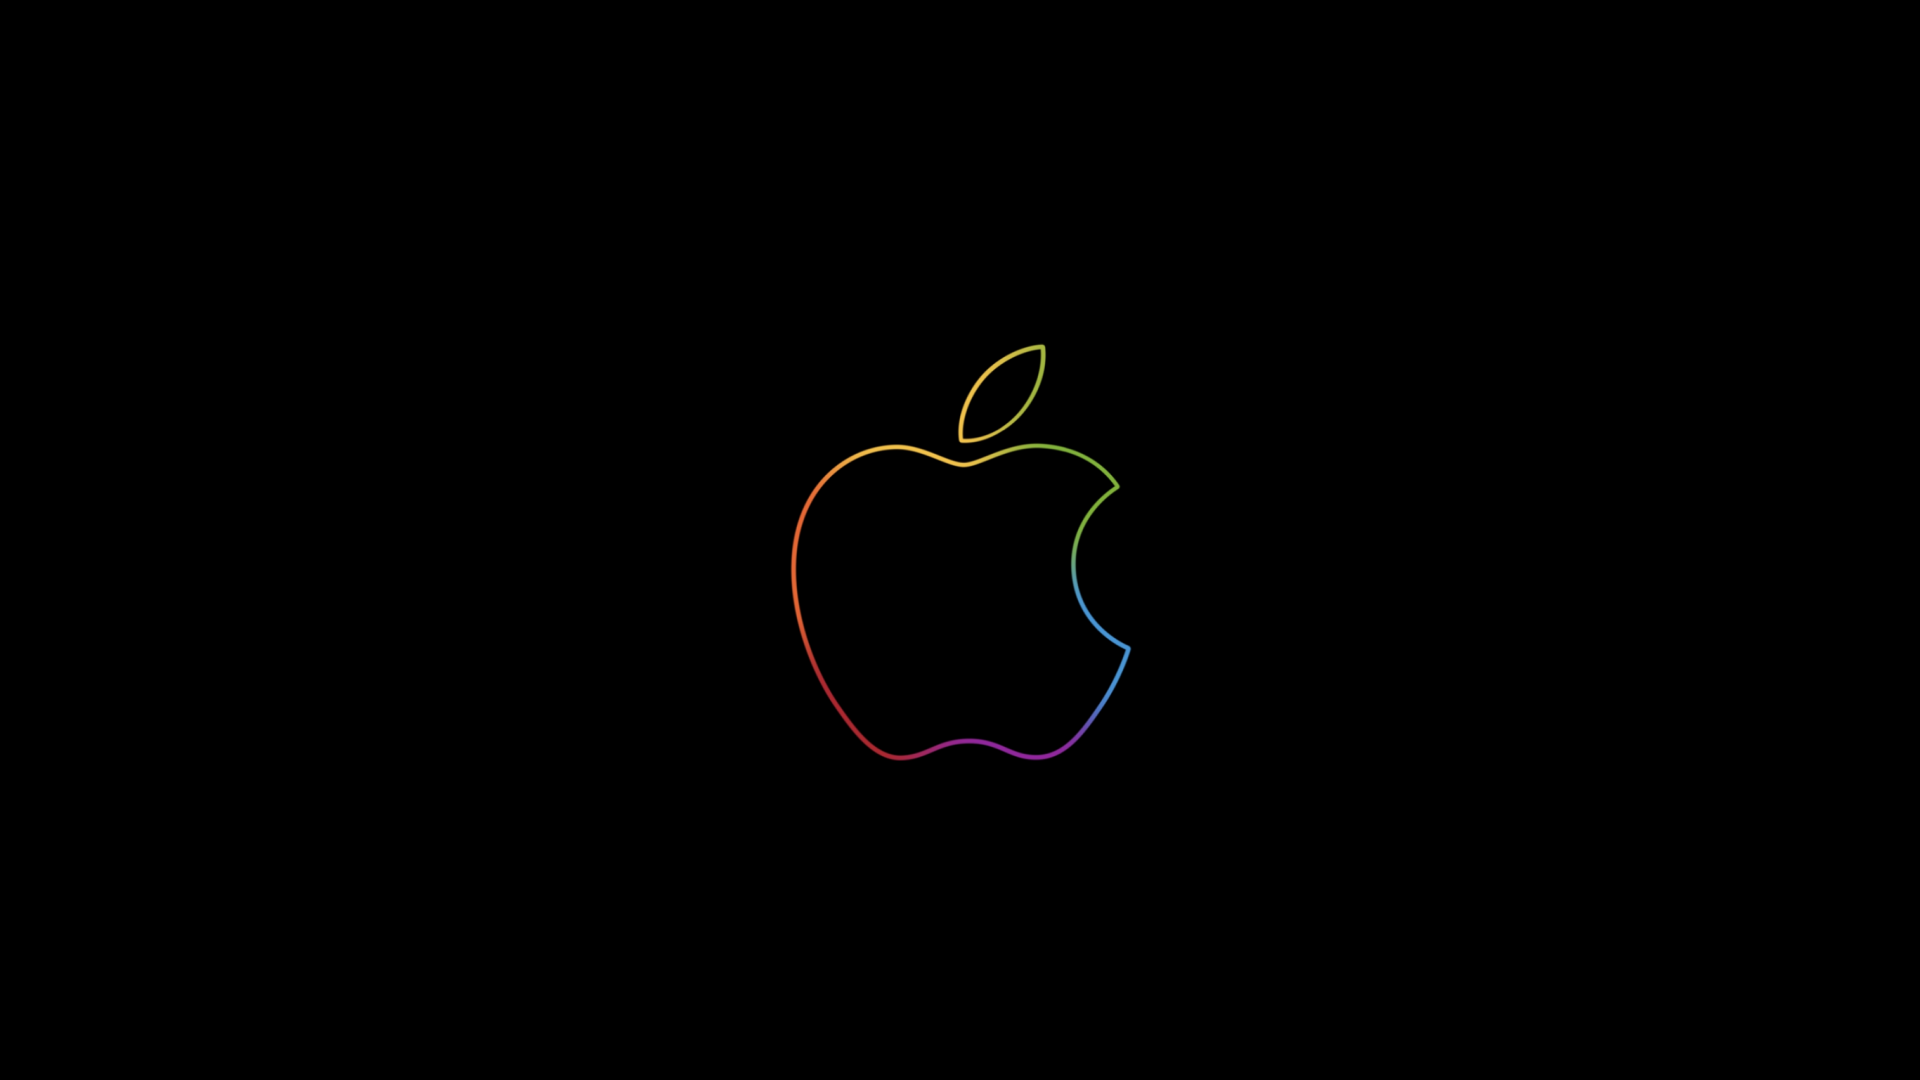 Apple logo 4K Wallpaper, Colorful .4kwallpaper.com